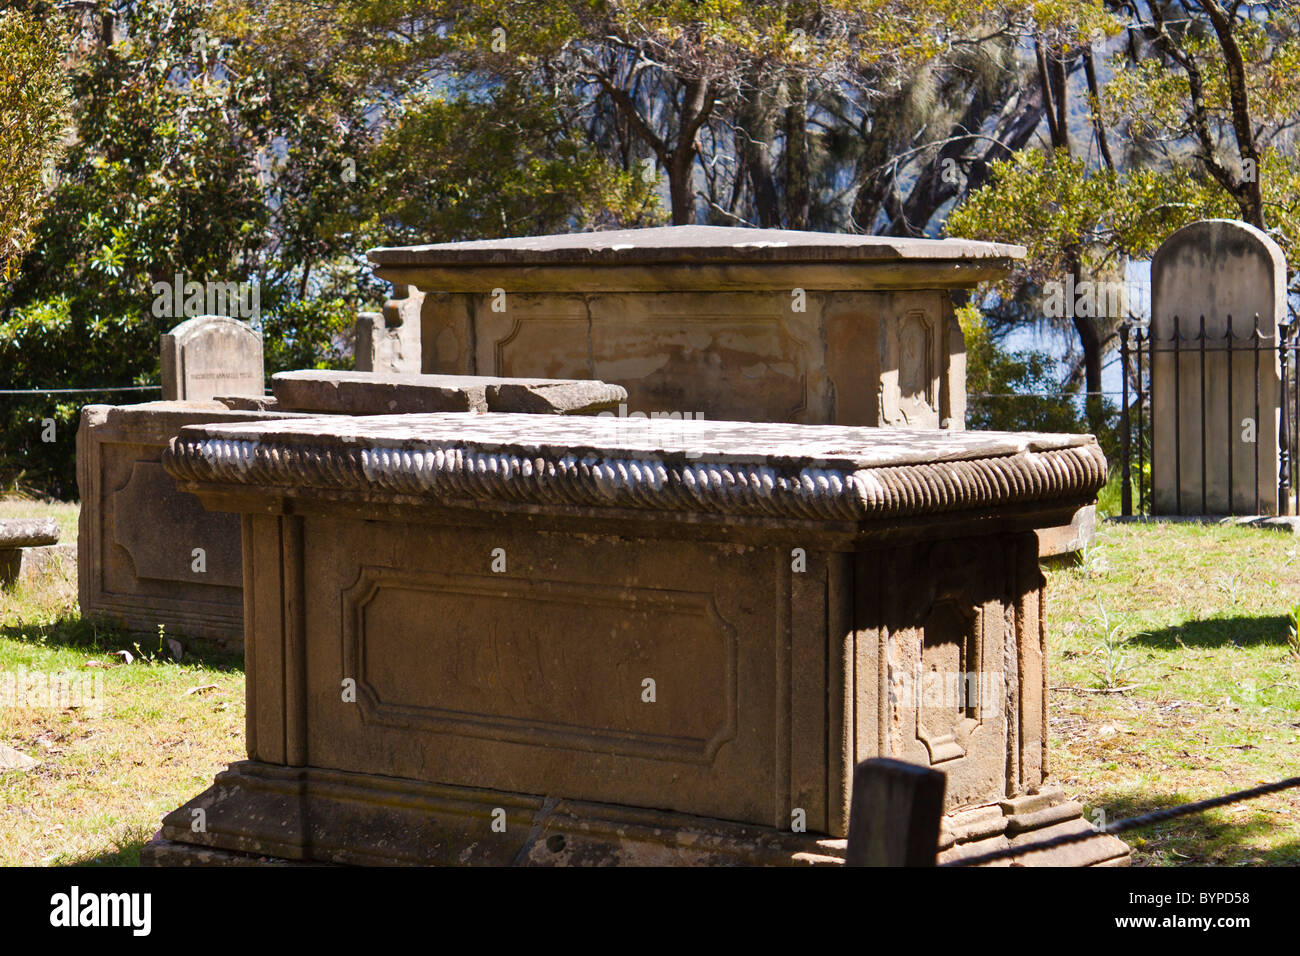 Cemetery on the Isle of the Dead, Port Arthur, Tasmania.  Now one of Australia's major tourist attractions. Stock Photo